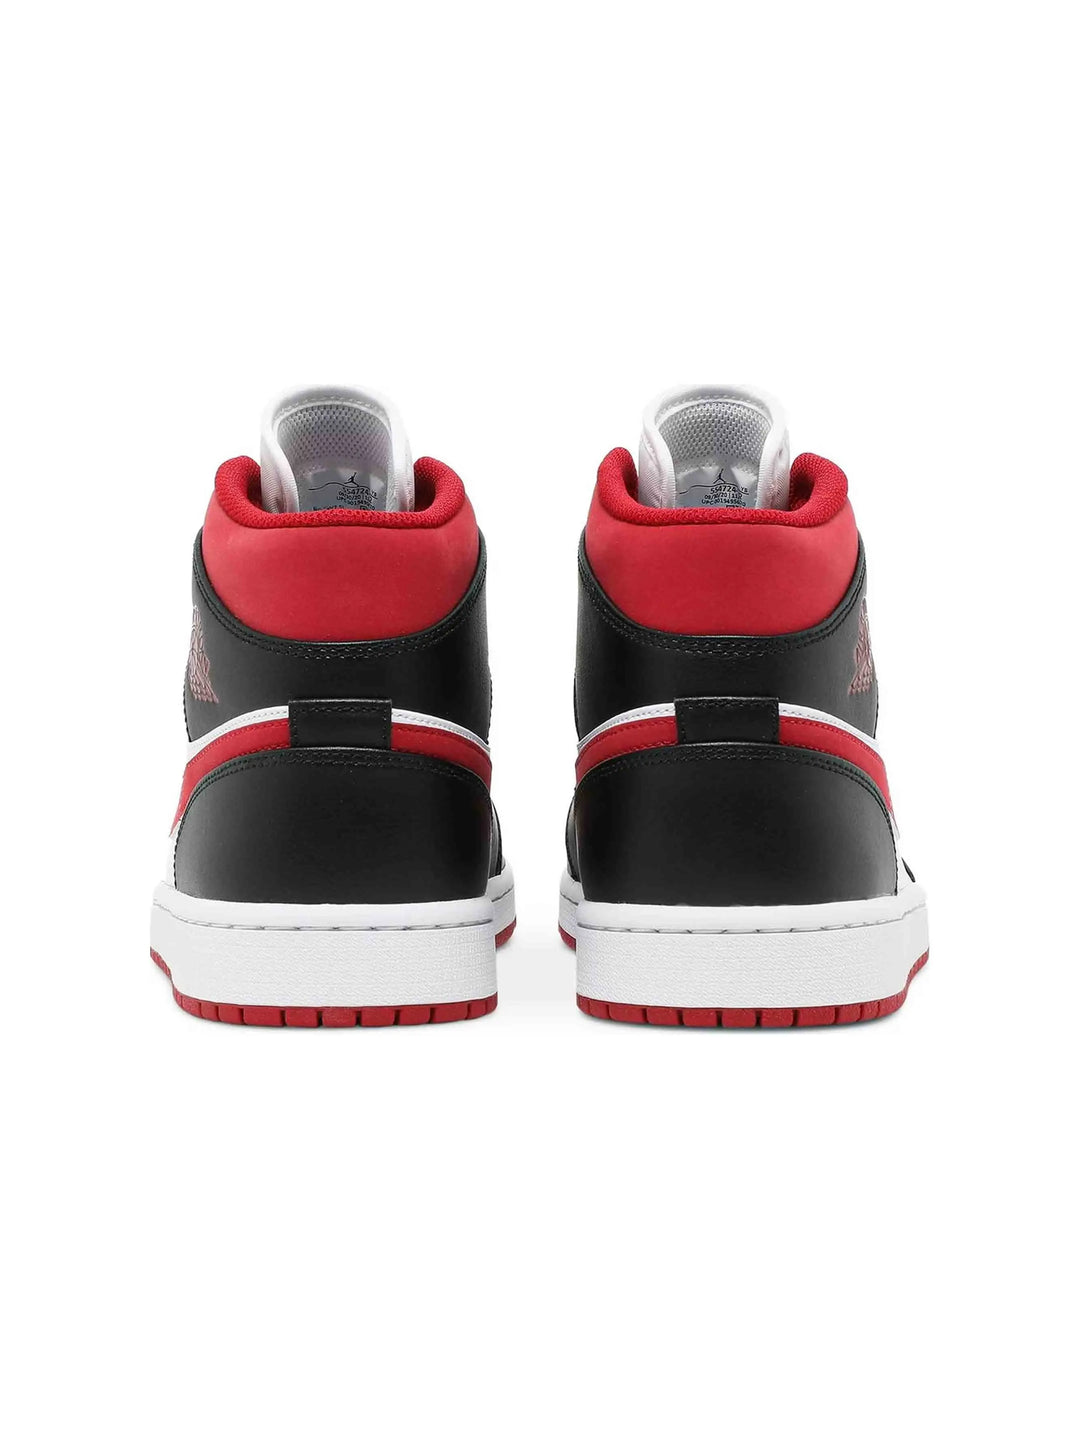 Nike Air Jordan 1 Mid Gym Red Black White Prior